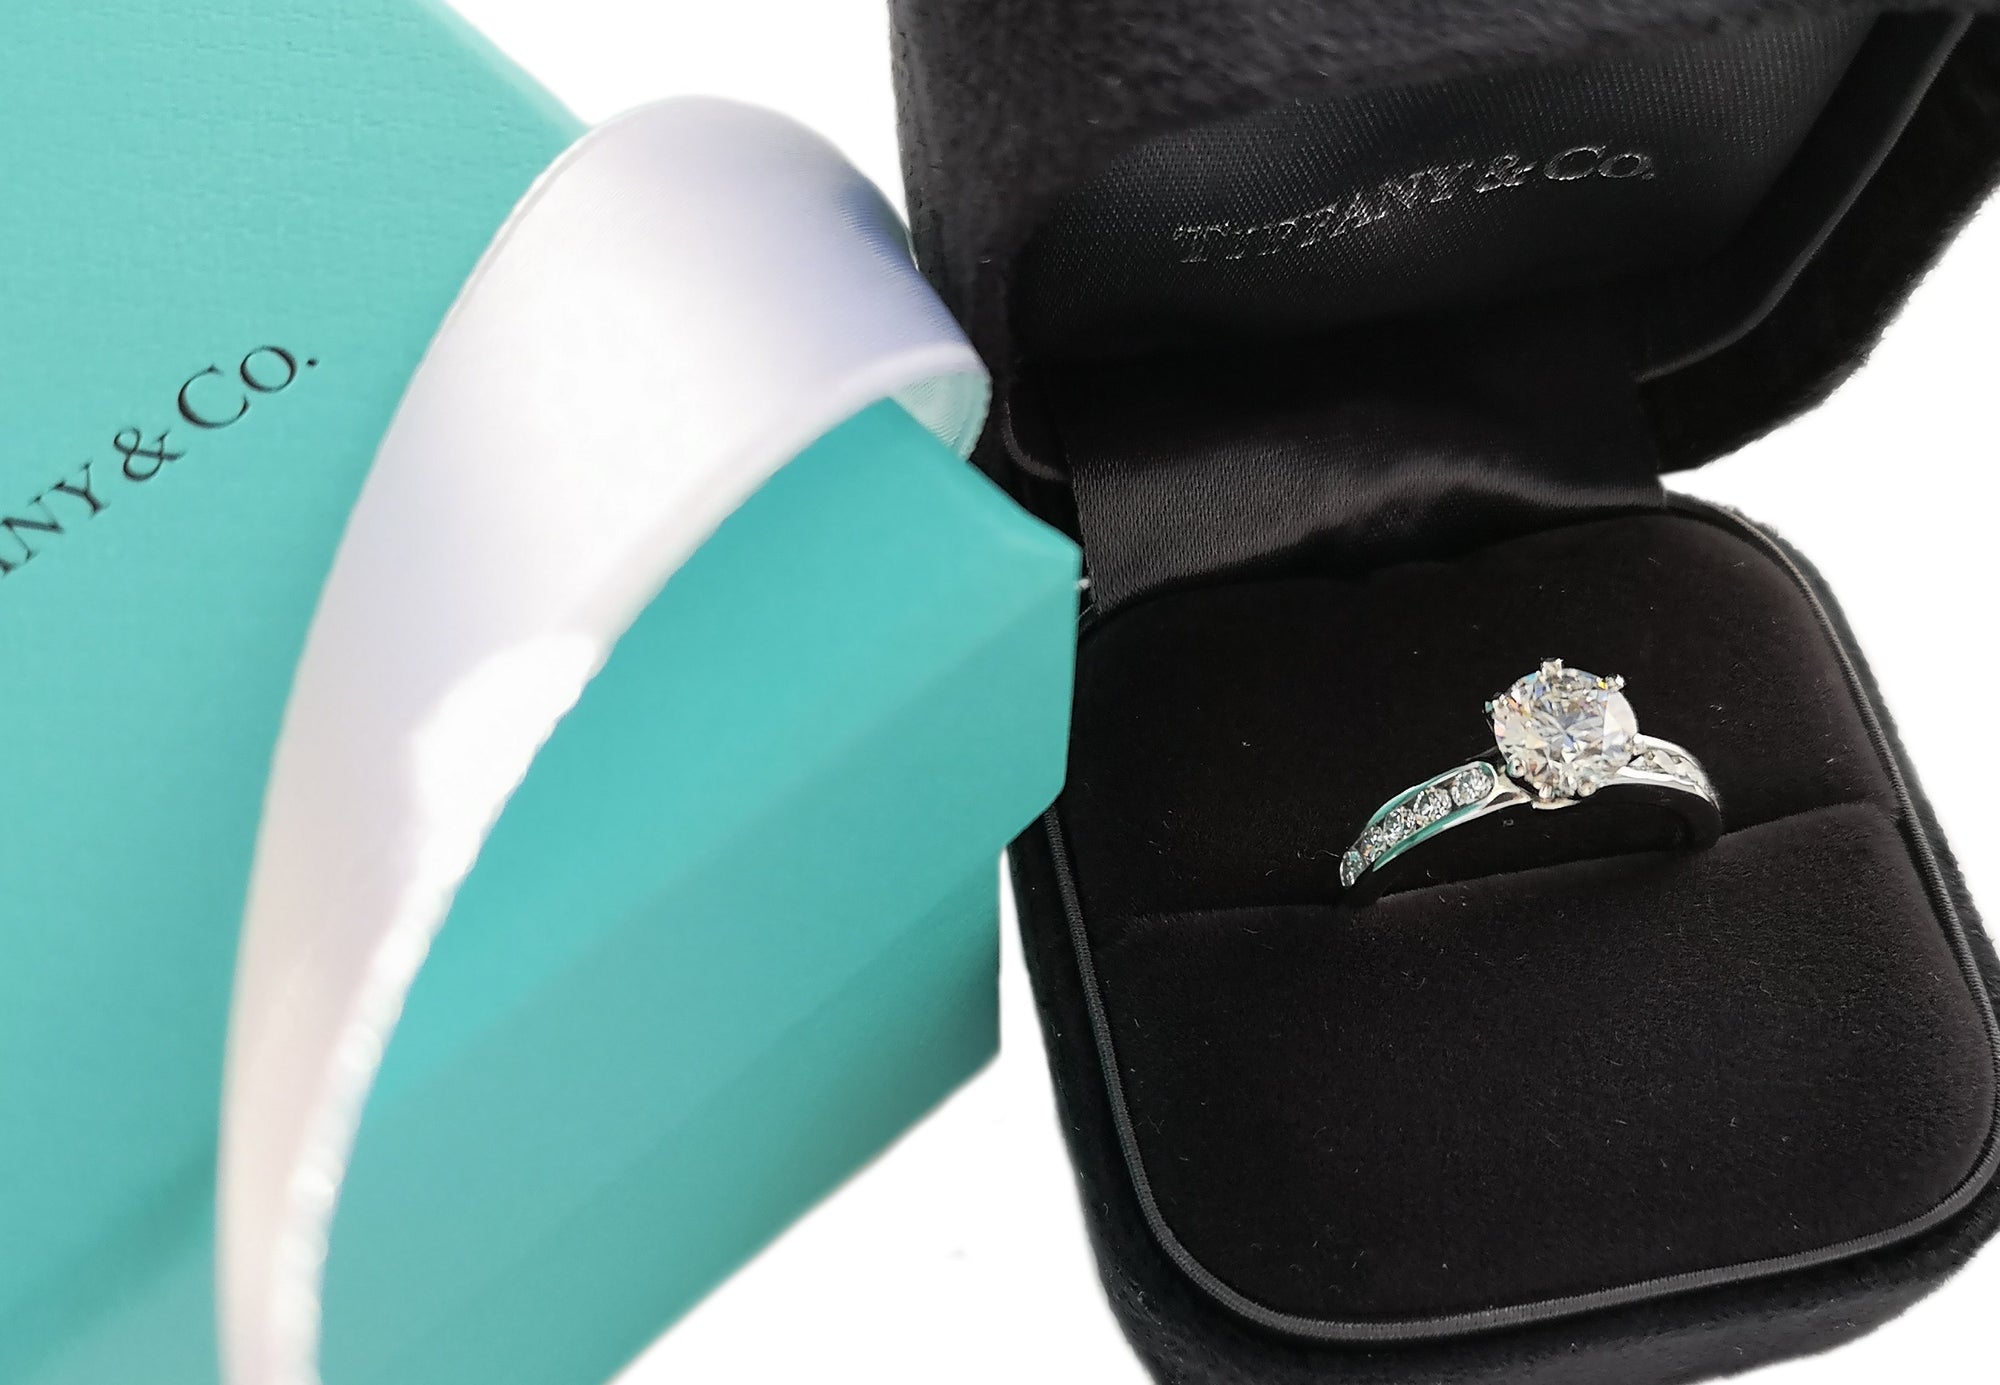 Tiffany & Co 1.34tcw E/VS1 Round Brilliant Cut Diamond Engagement Ring